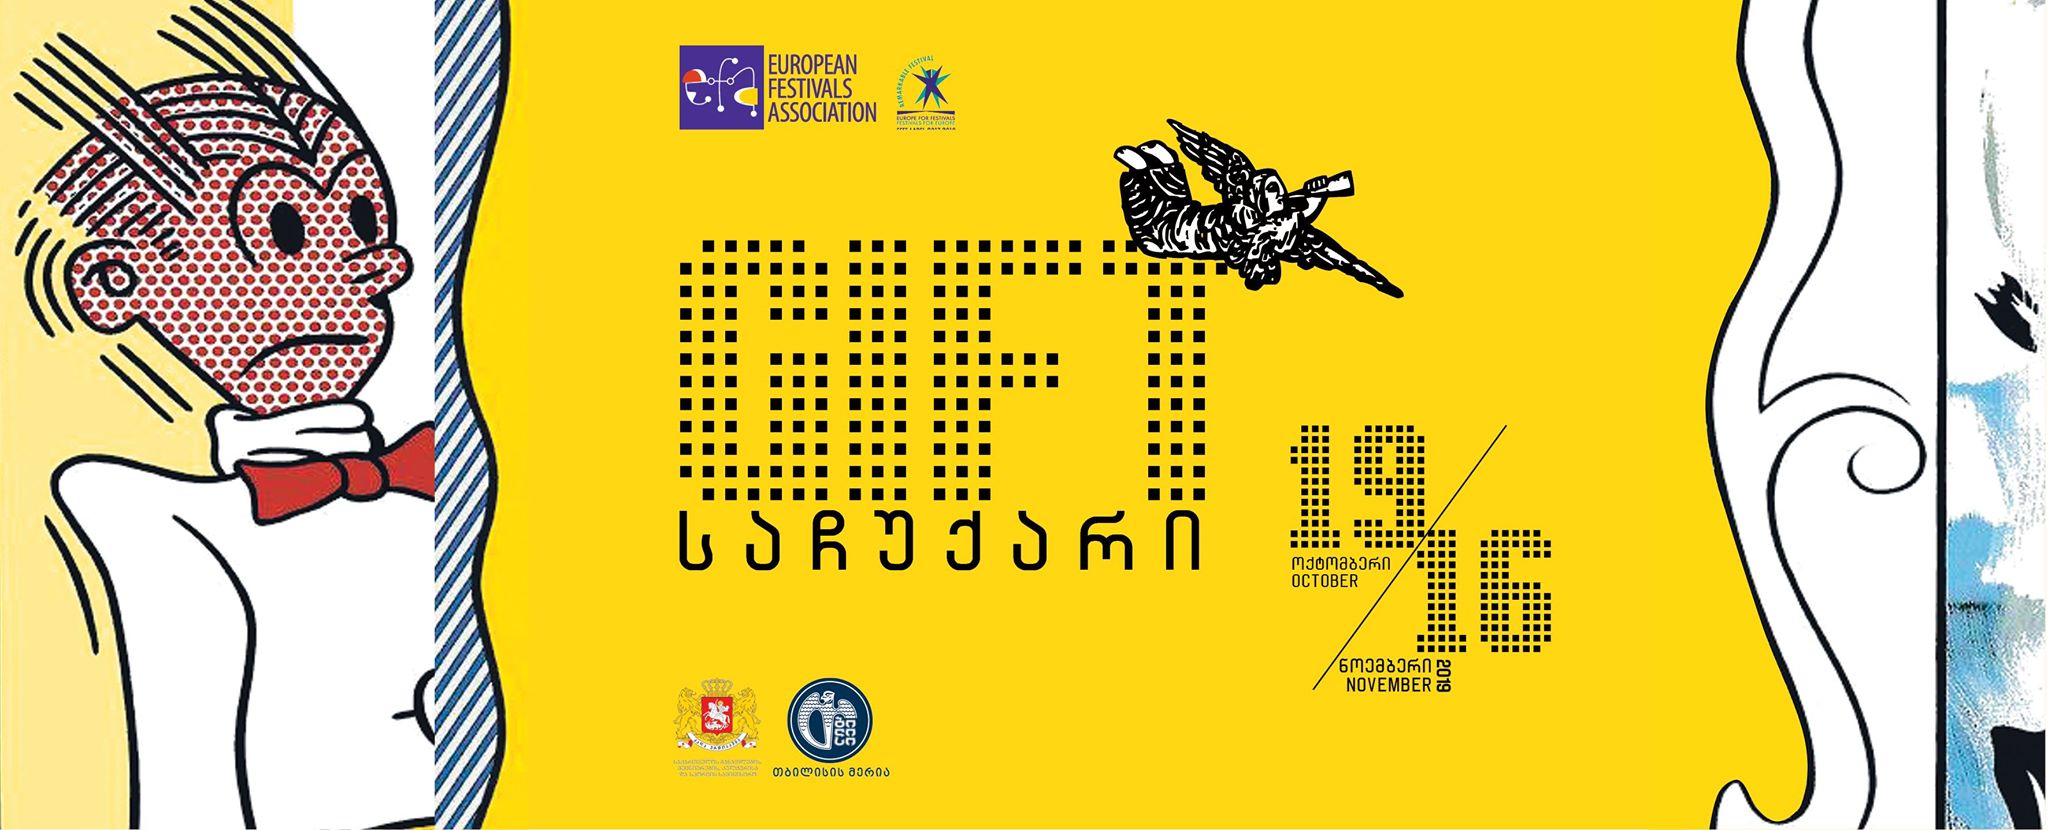 Internationales Georgisches Kunstfestival zu Ehren von Mikhail Tumanishvili (GIFT) | 19 Oktober - 16 November 2019 | Tiblisi | Kunstfestival